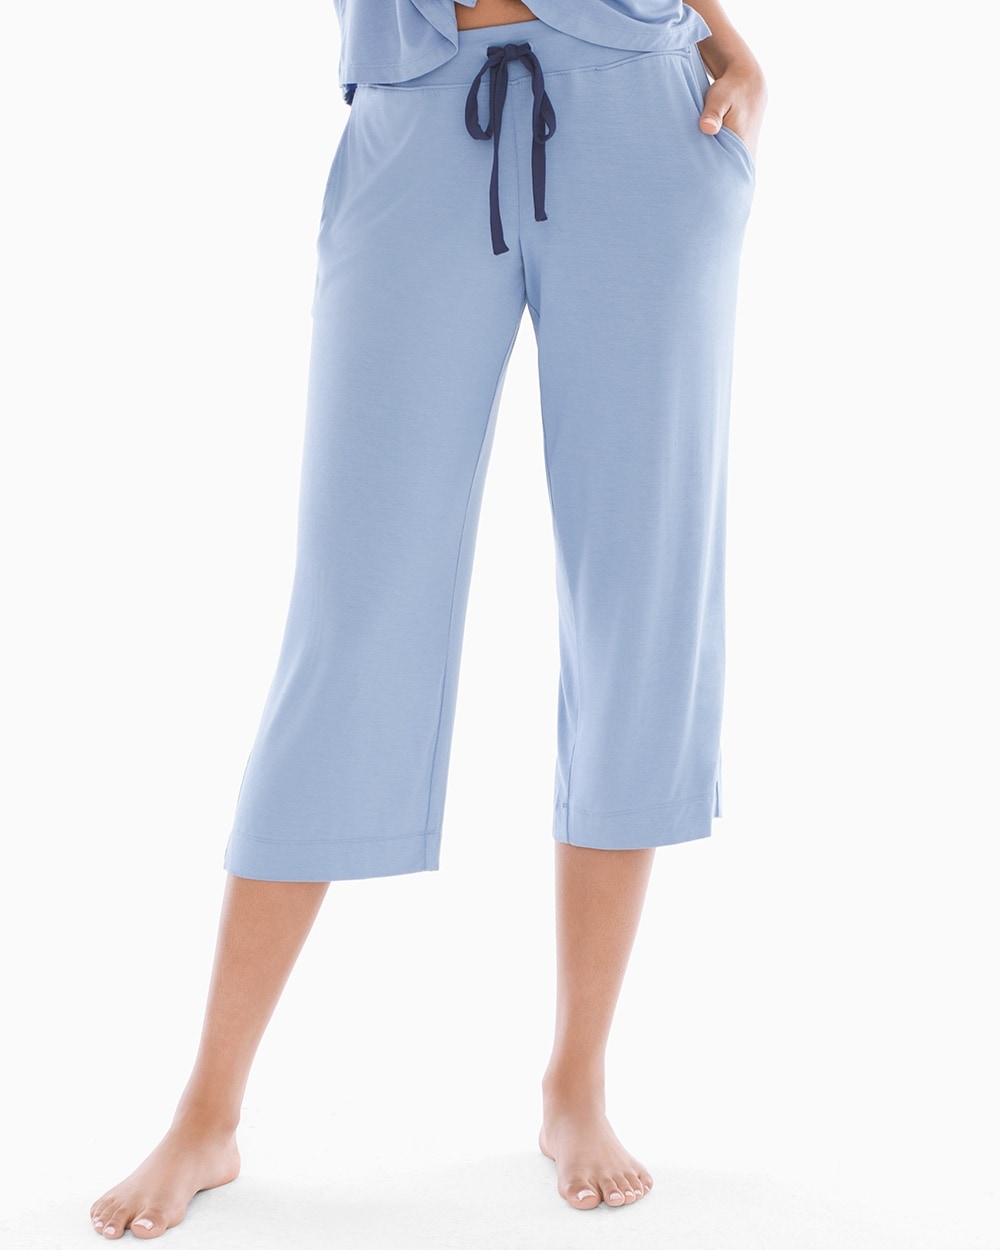 Cool Nights Crop Pajama Pants Blue Stone